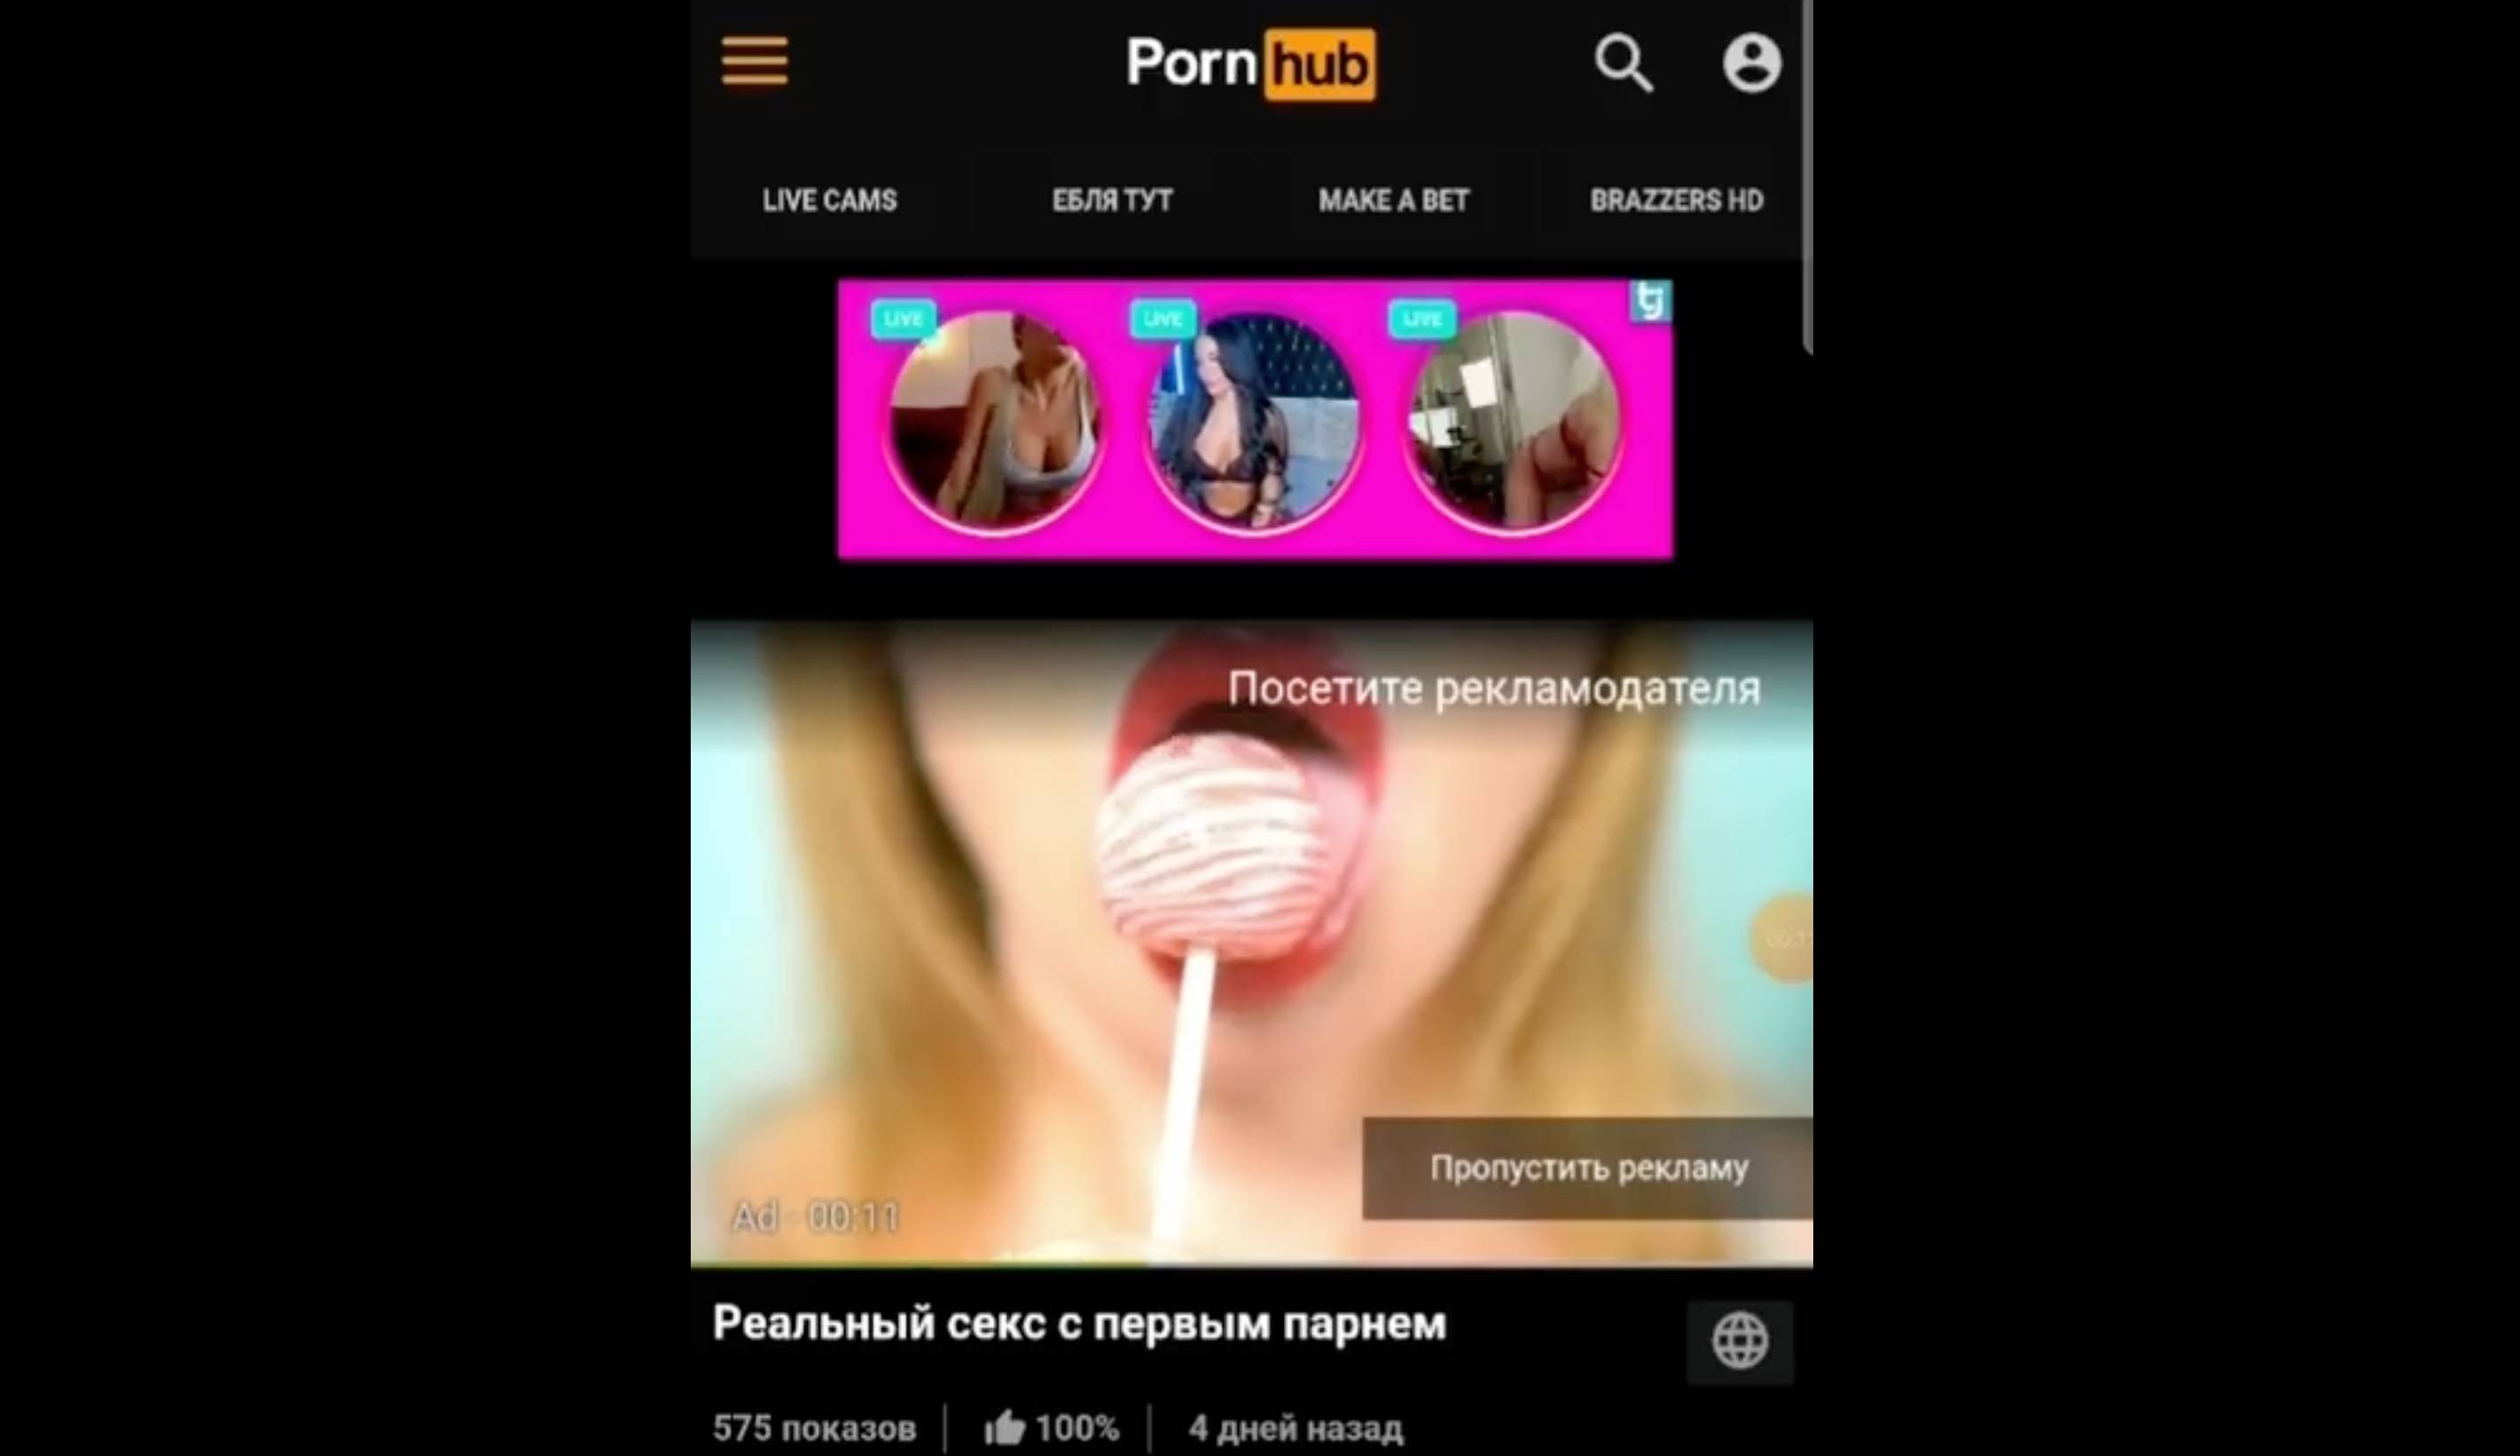 Poinhub - Notorious Russian Mercenaries Wagner Are Advertising on Pornhub